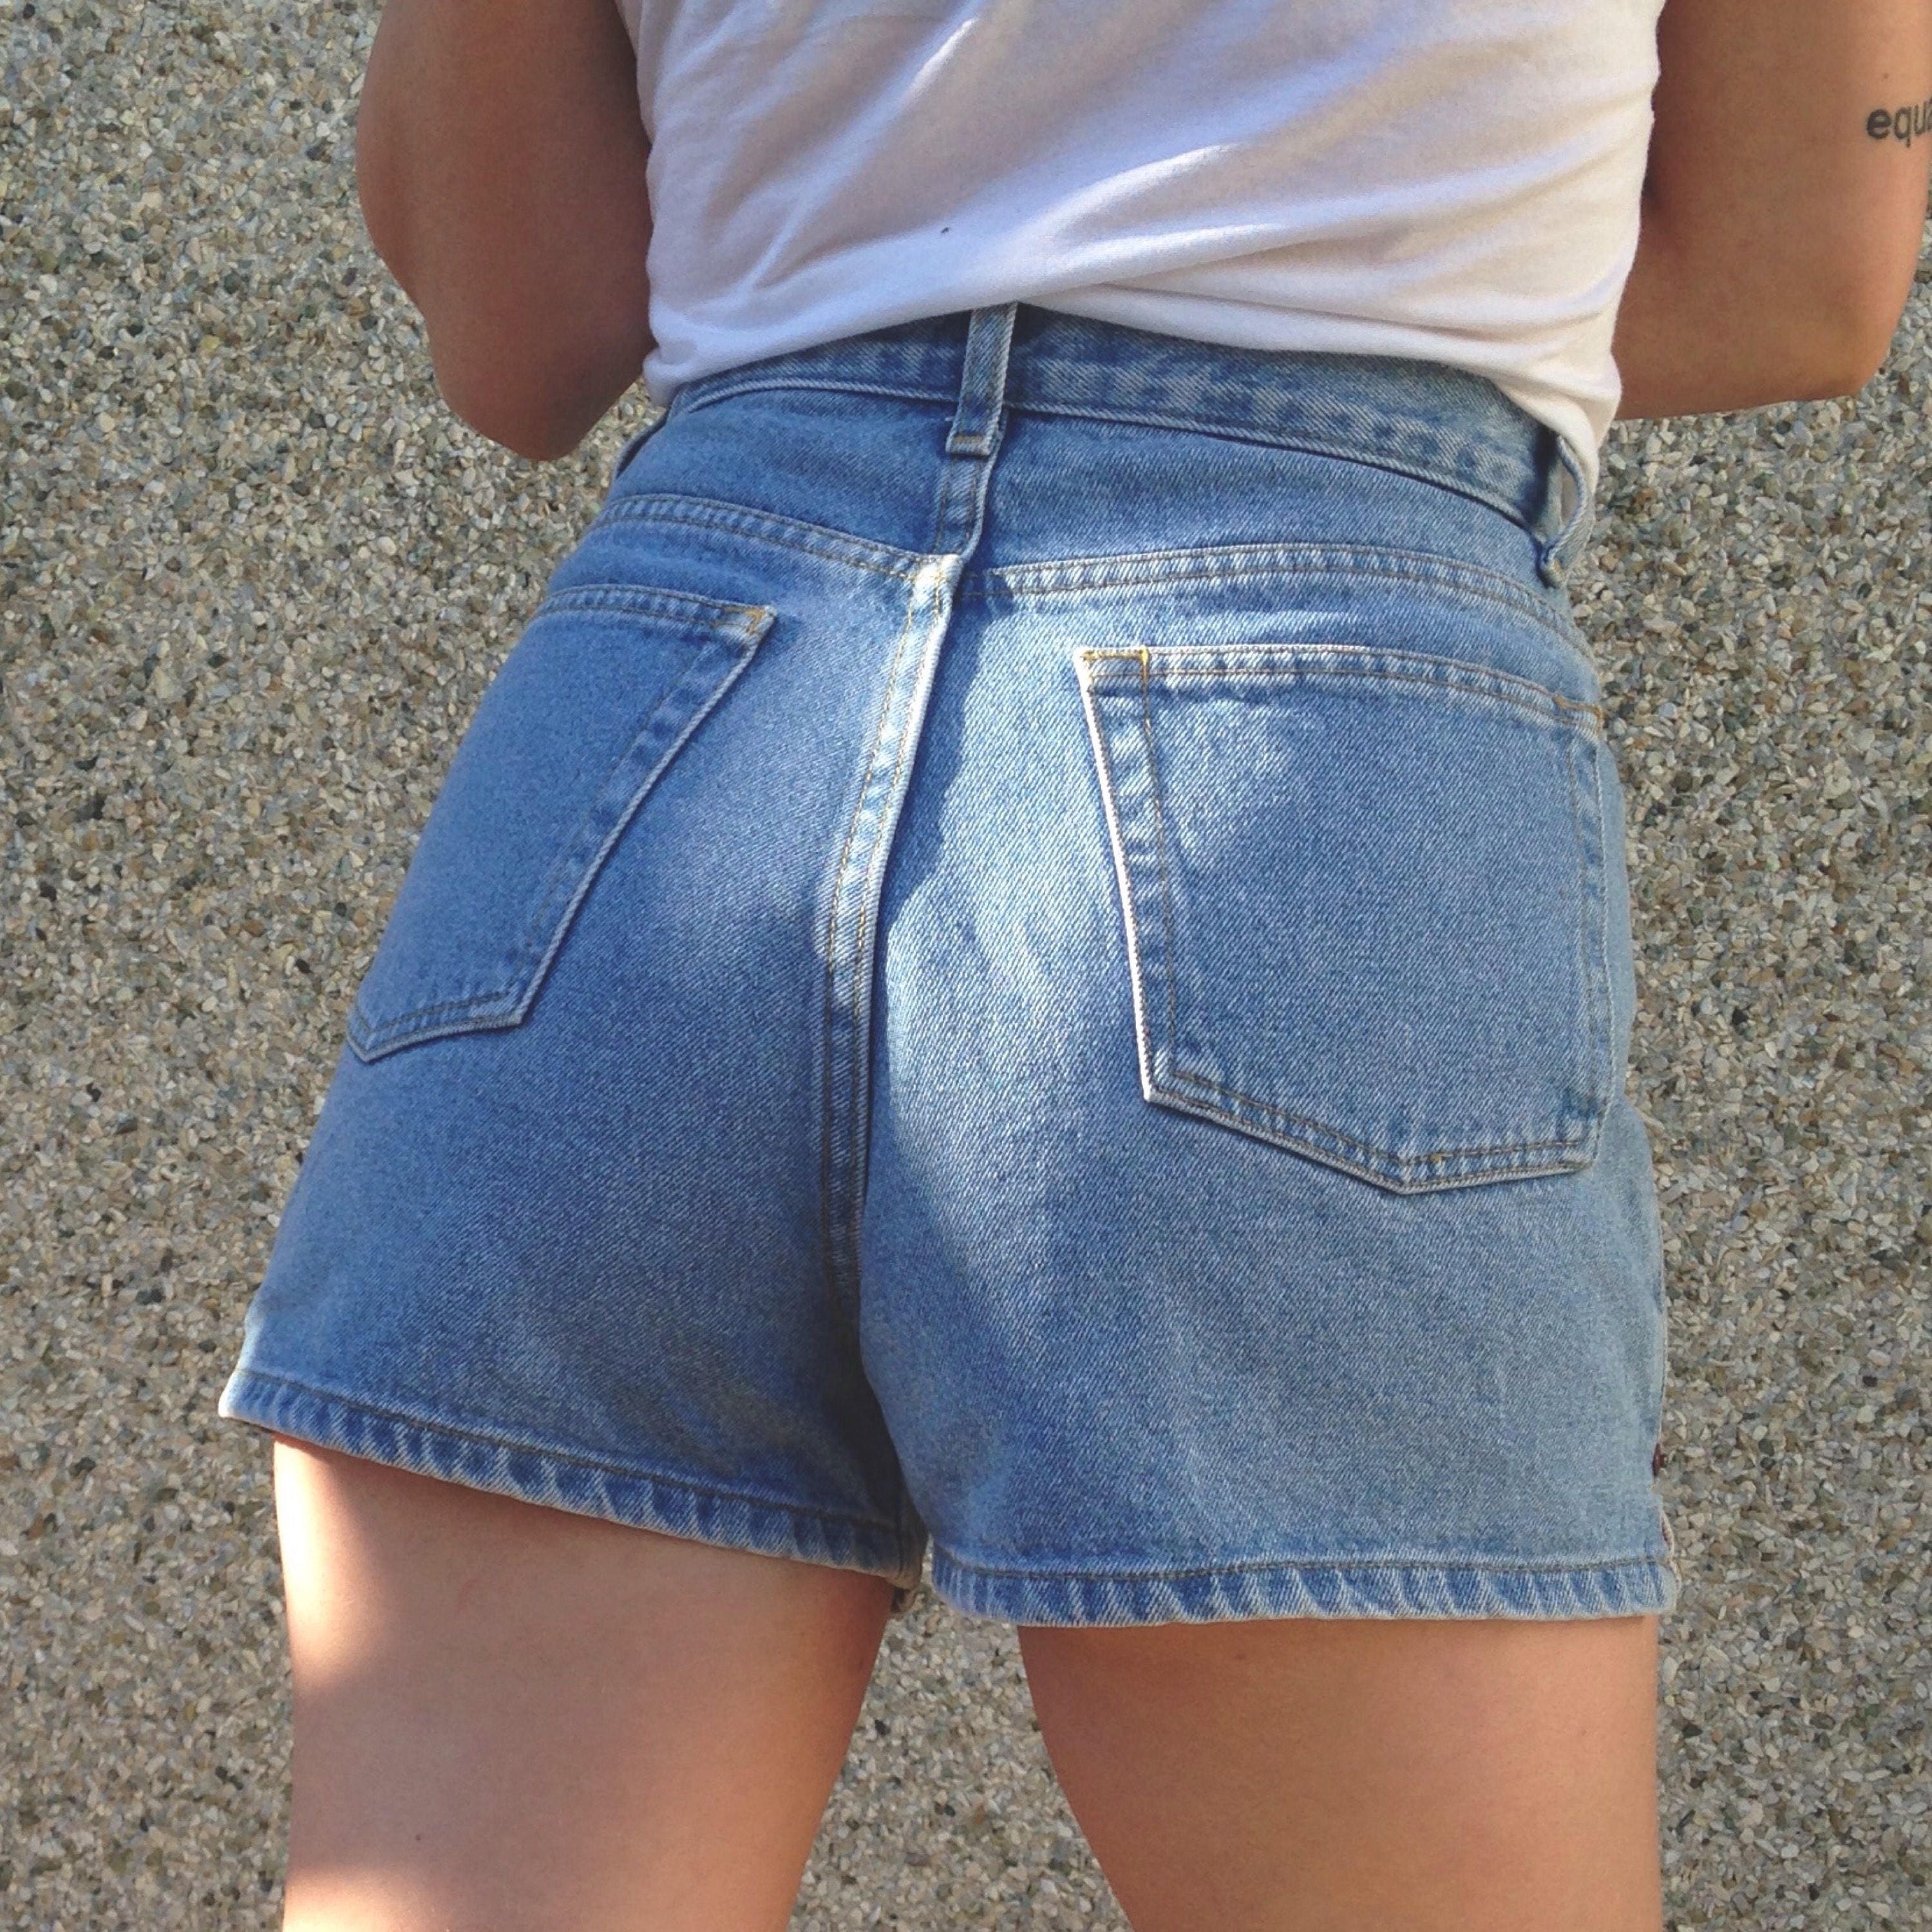 80s booty shorts, Men's Shorts | Women's Shorts | Latest Styles ...